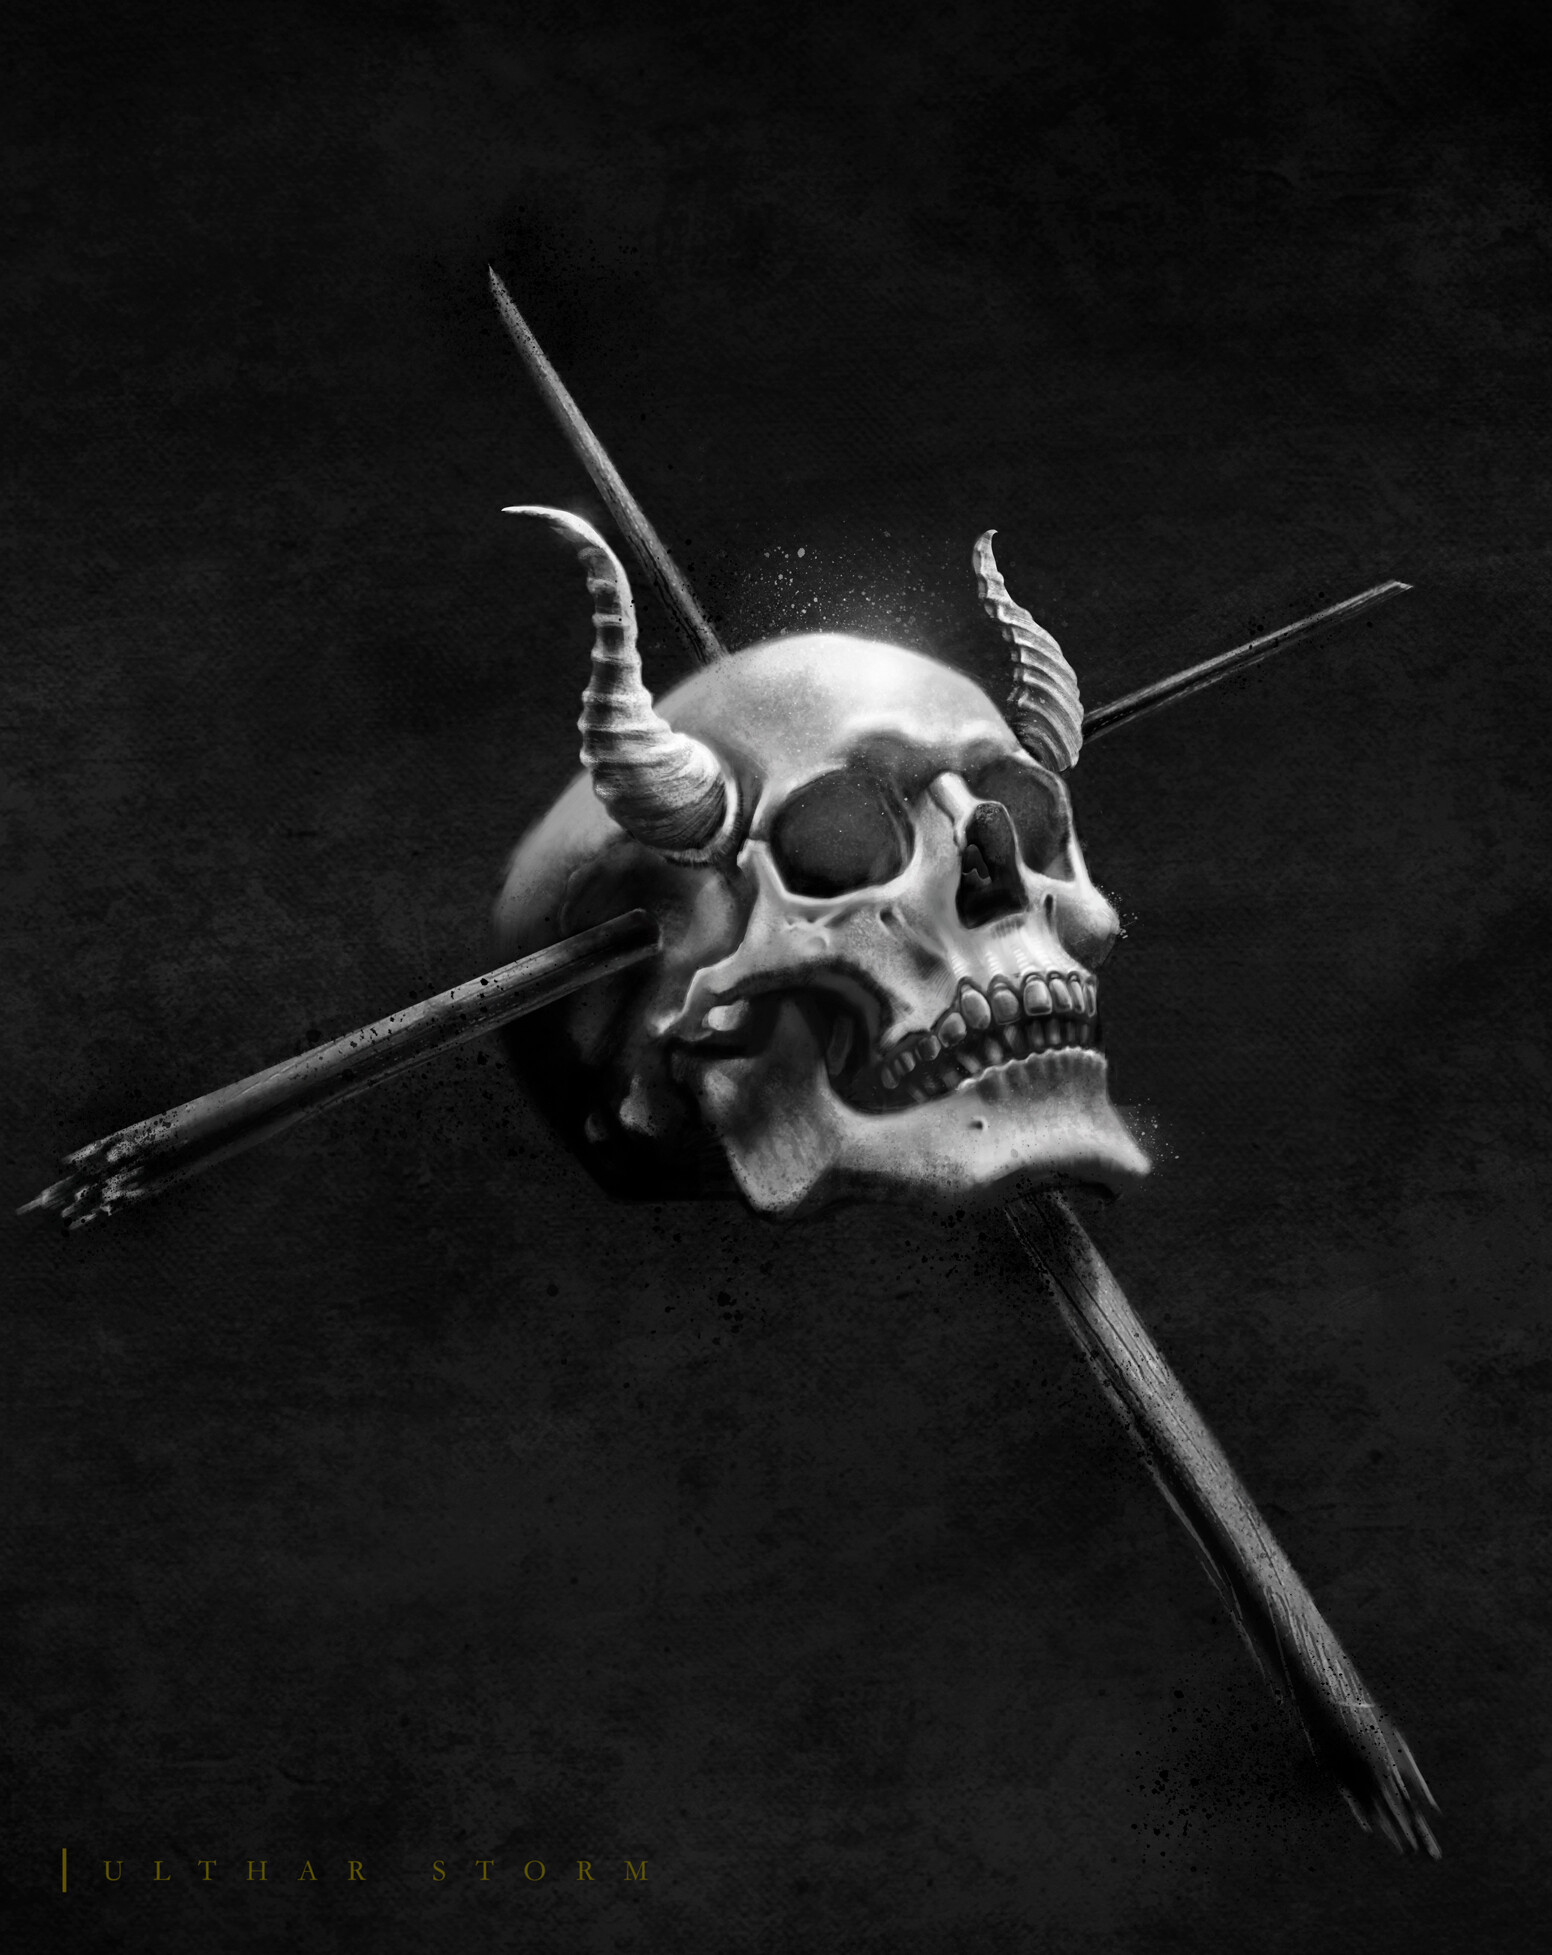 Ulthar Storm - Epicus Doomicus Metallicus - Skull + Process